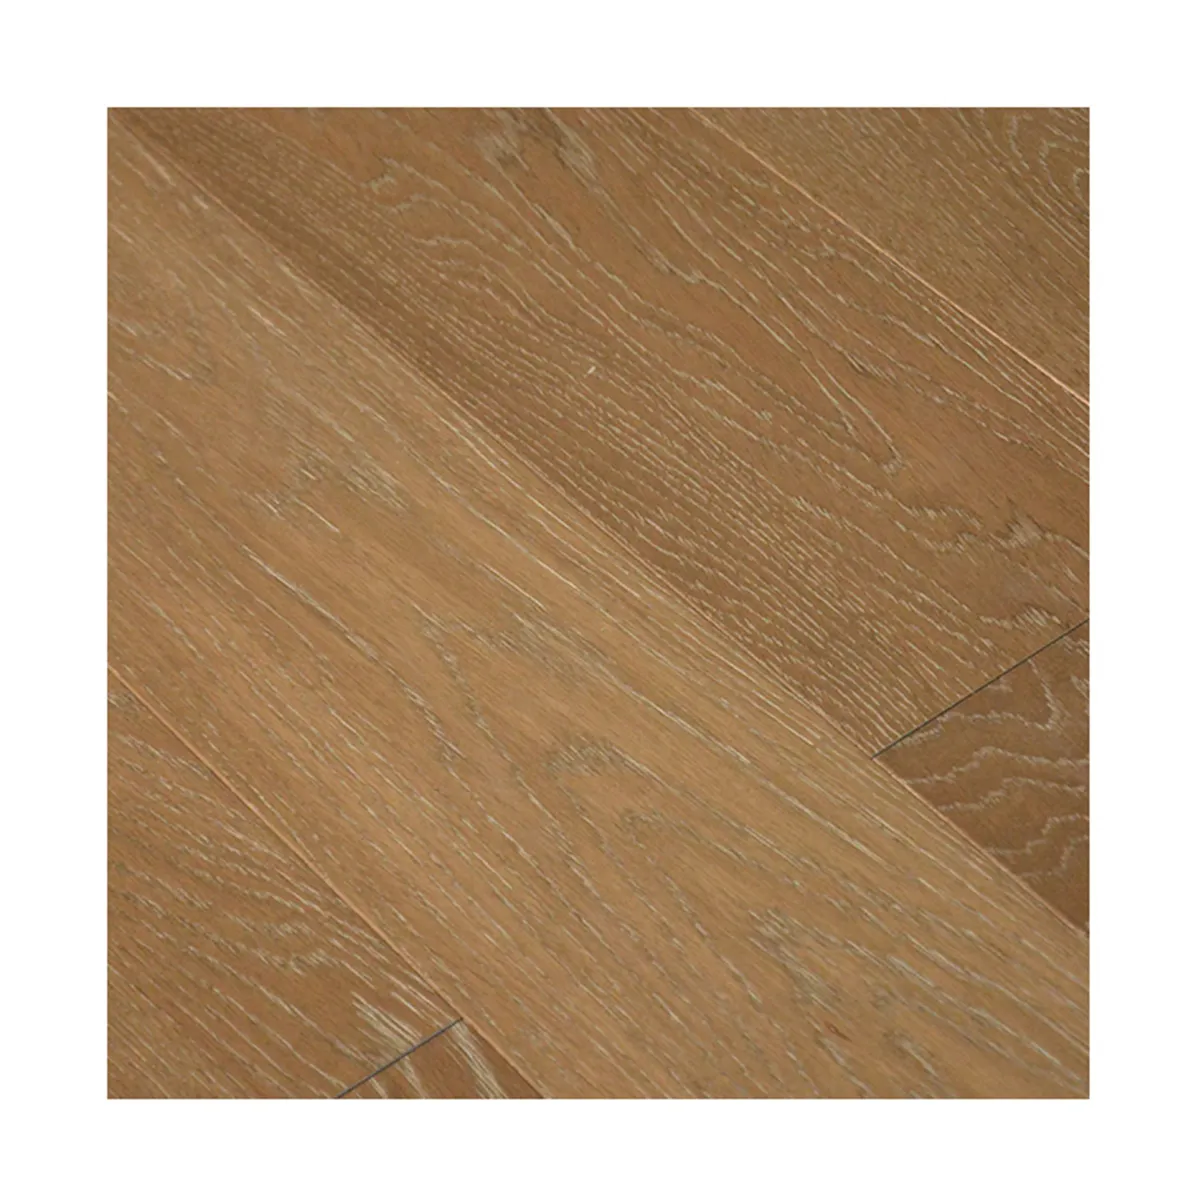 नया चलन फर्श बोर्ड लकड़ी ओक इंजीनियर लकड़ी का फर्श 3-लेयर इंजीनियरिंग लकड़ी लकड़ी का फर्श